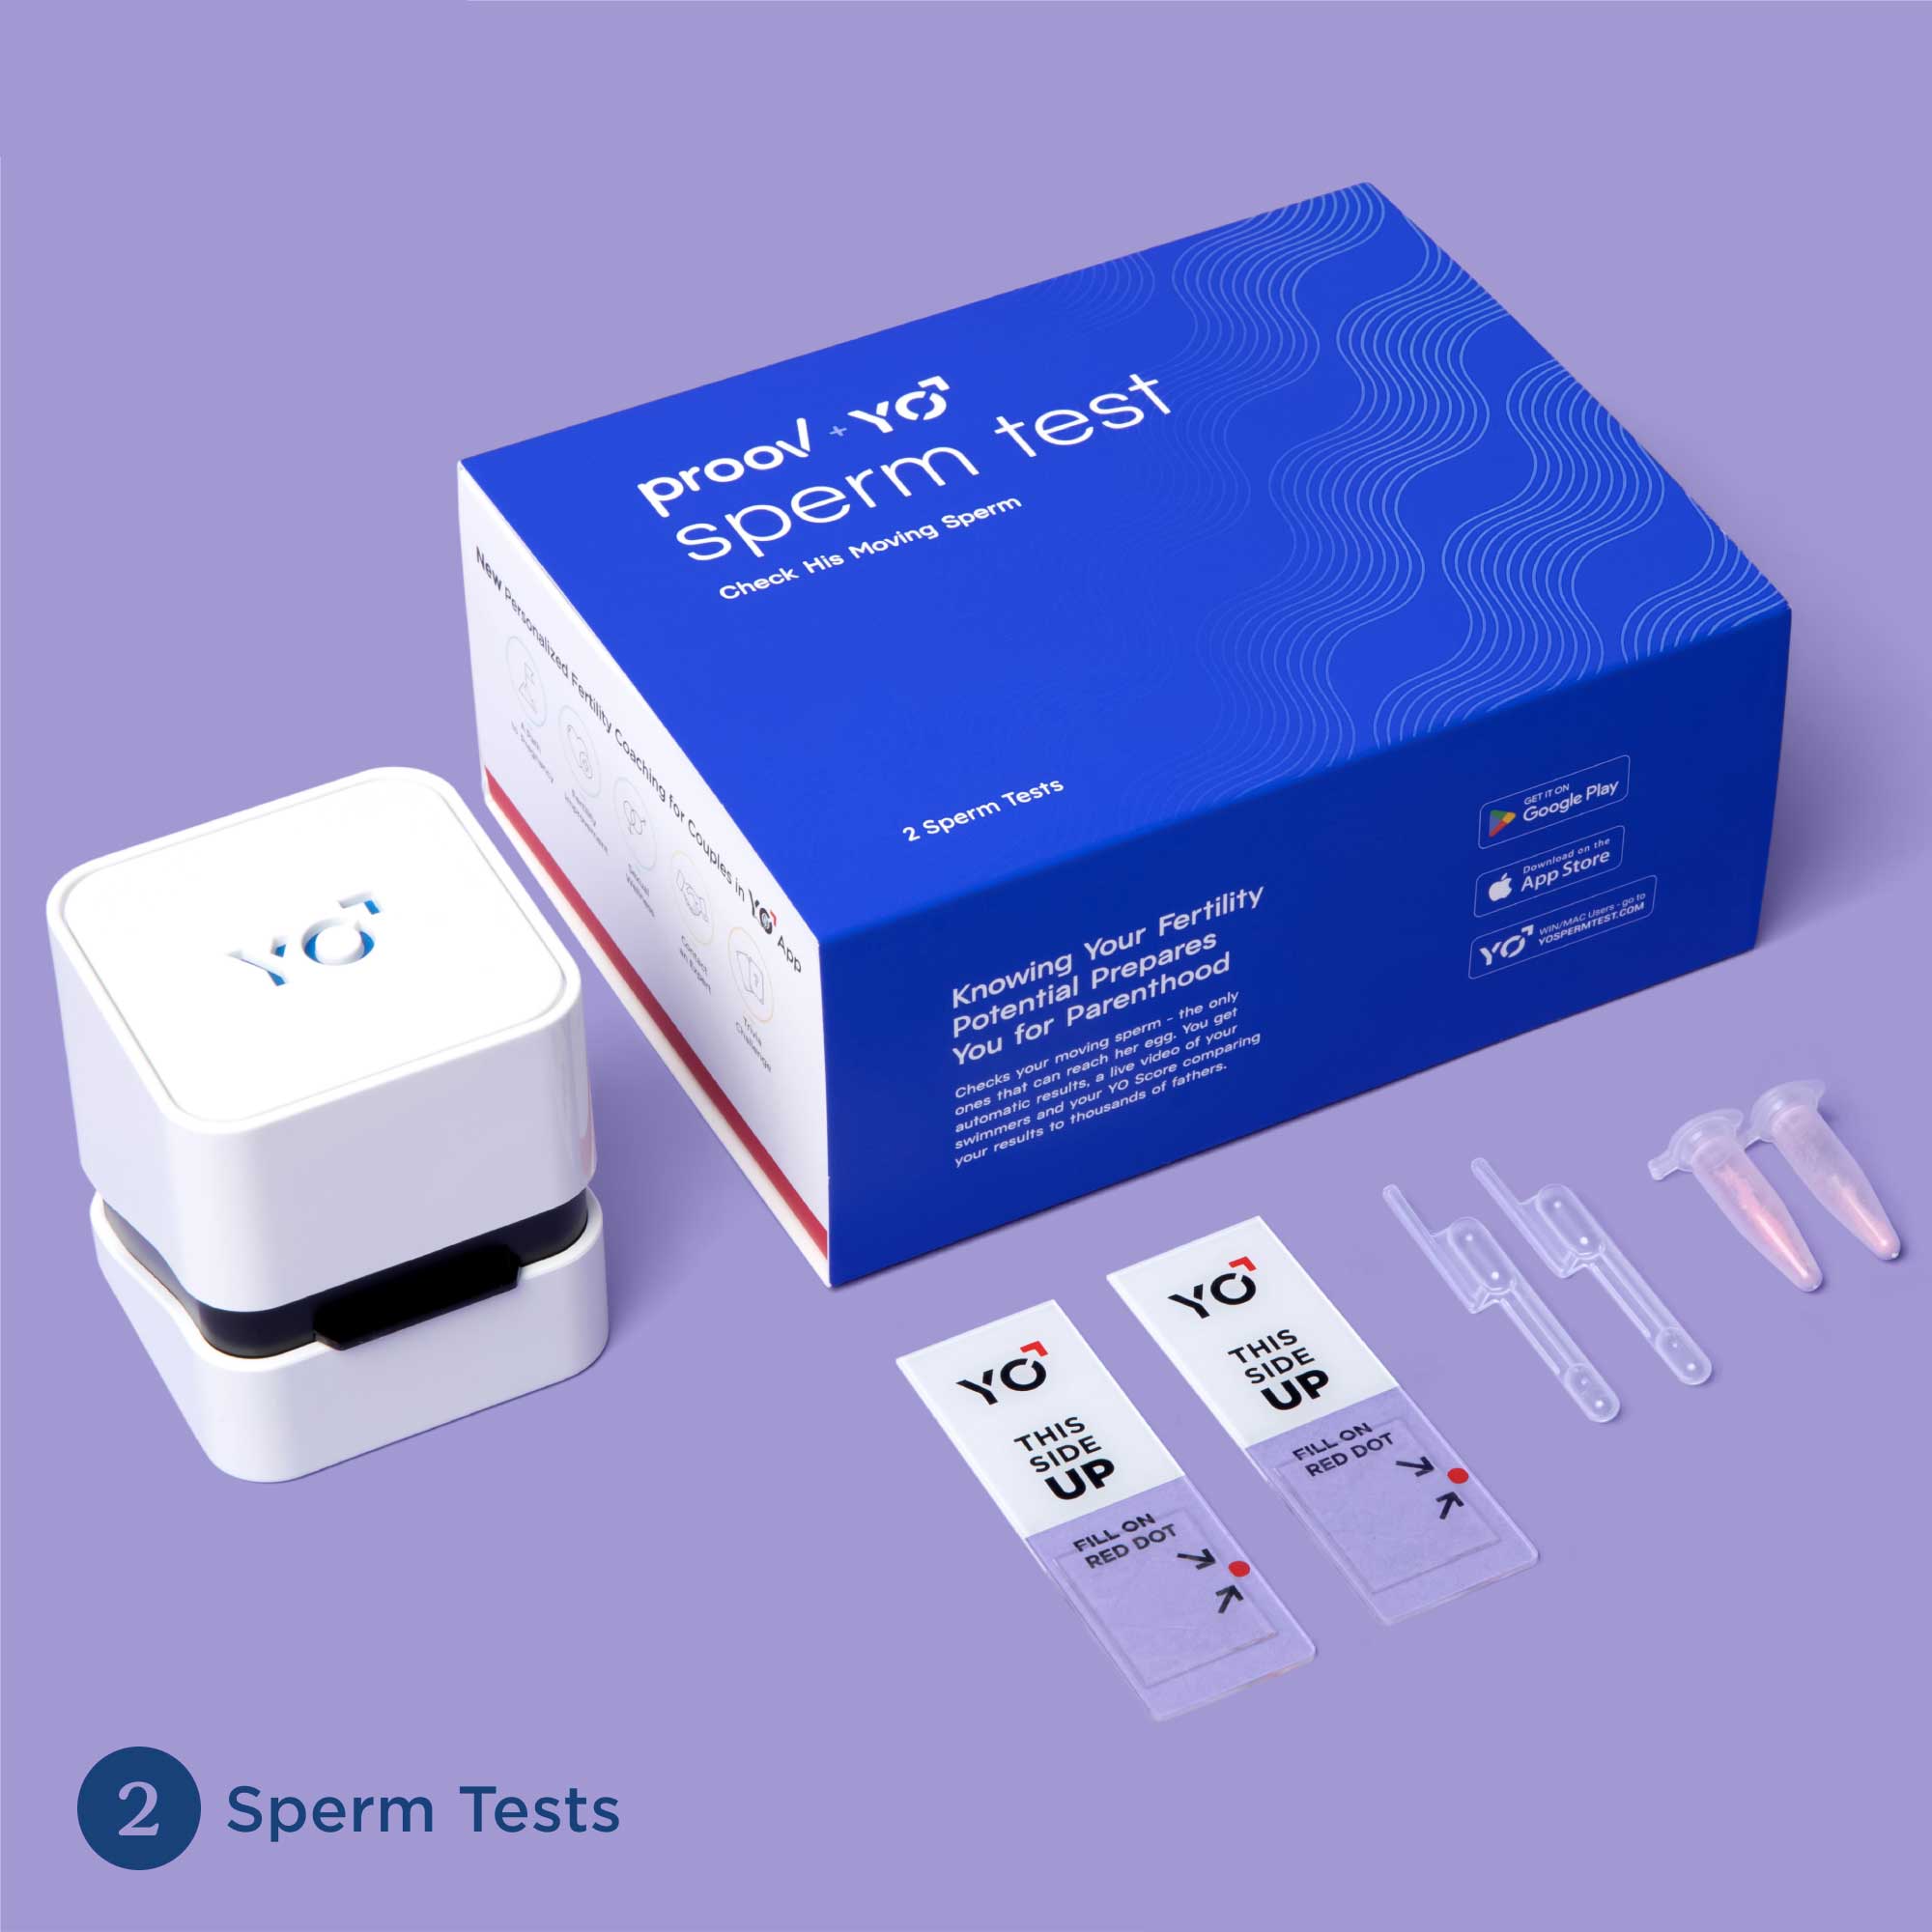 Proov Sperm Testing Kit on a purple surface